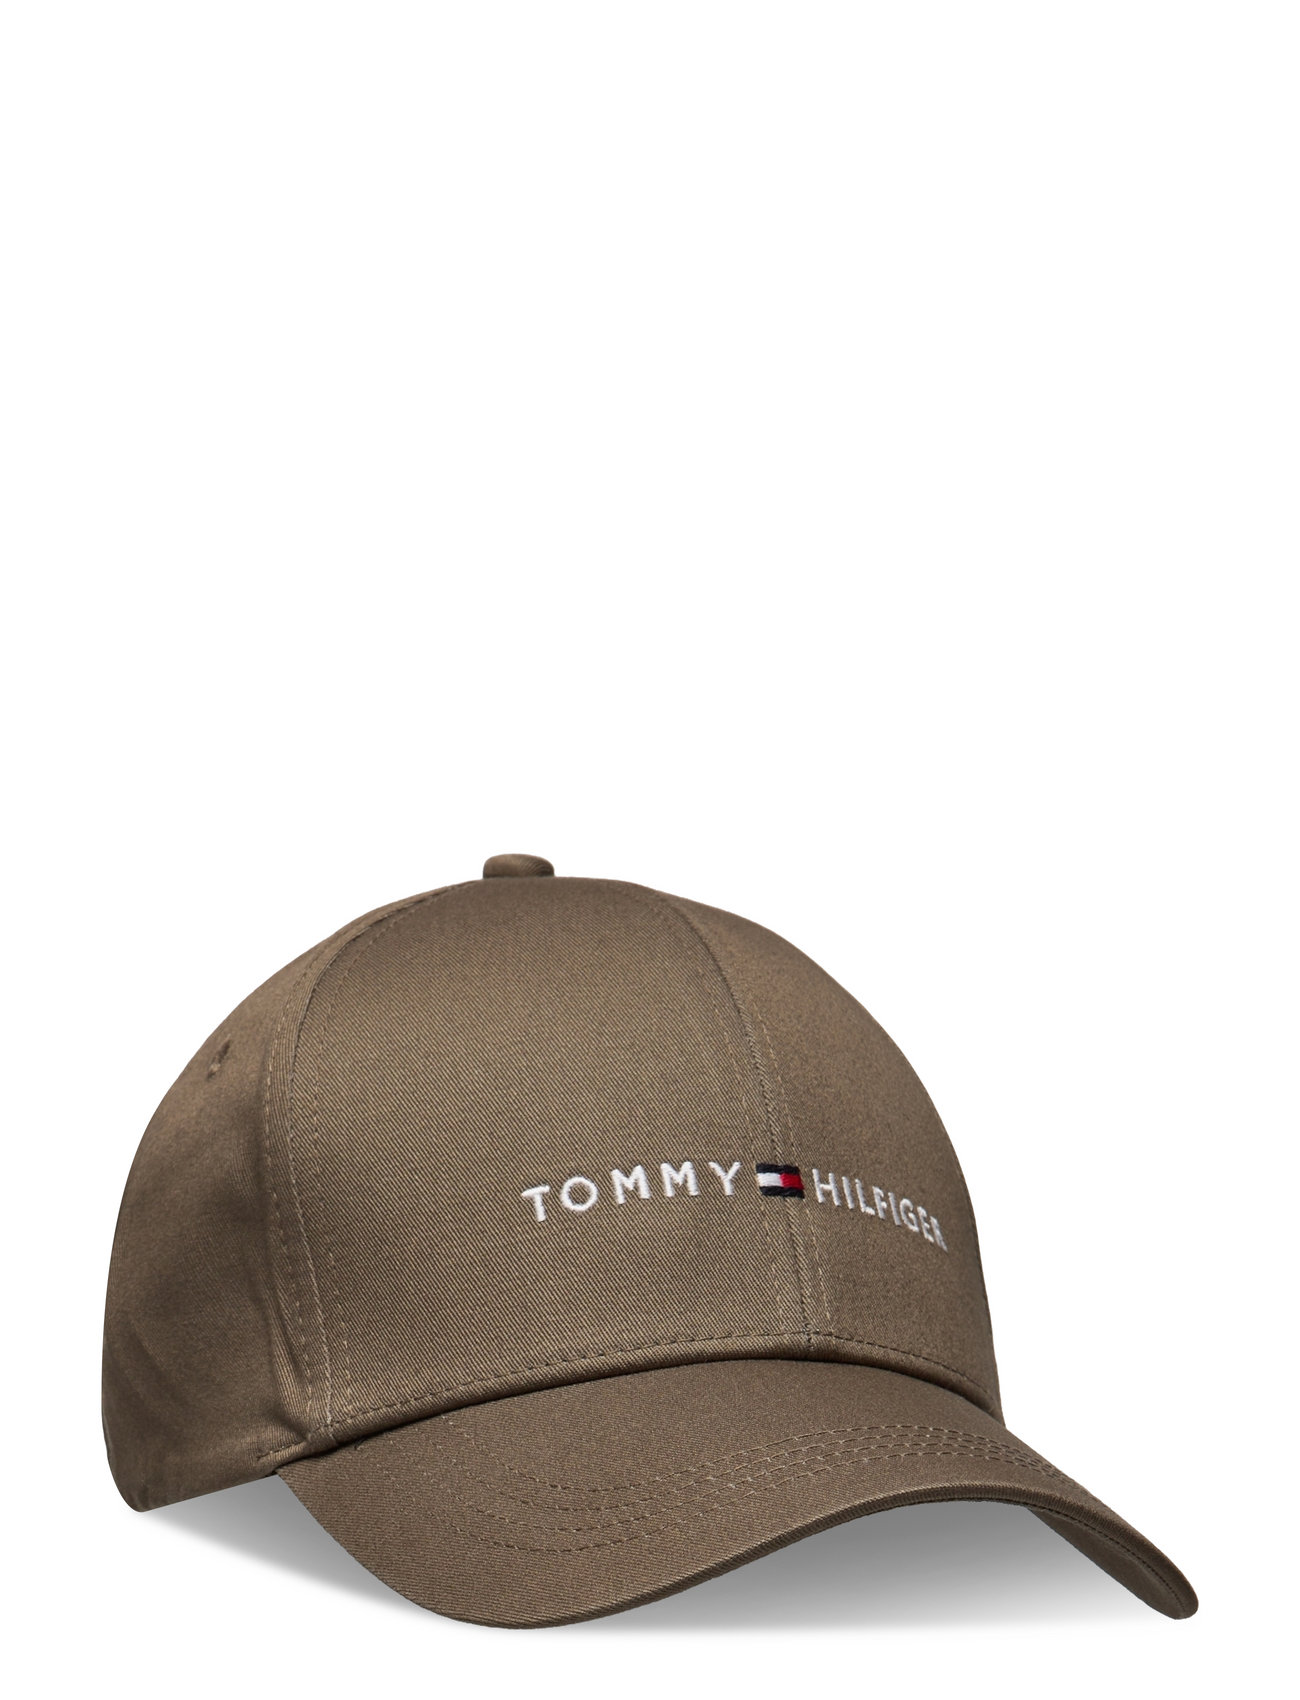 Skyline Cap Accessories Headwear Caps Khaki Green Tommy Hilfiger